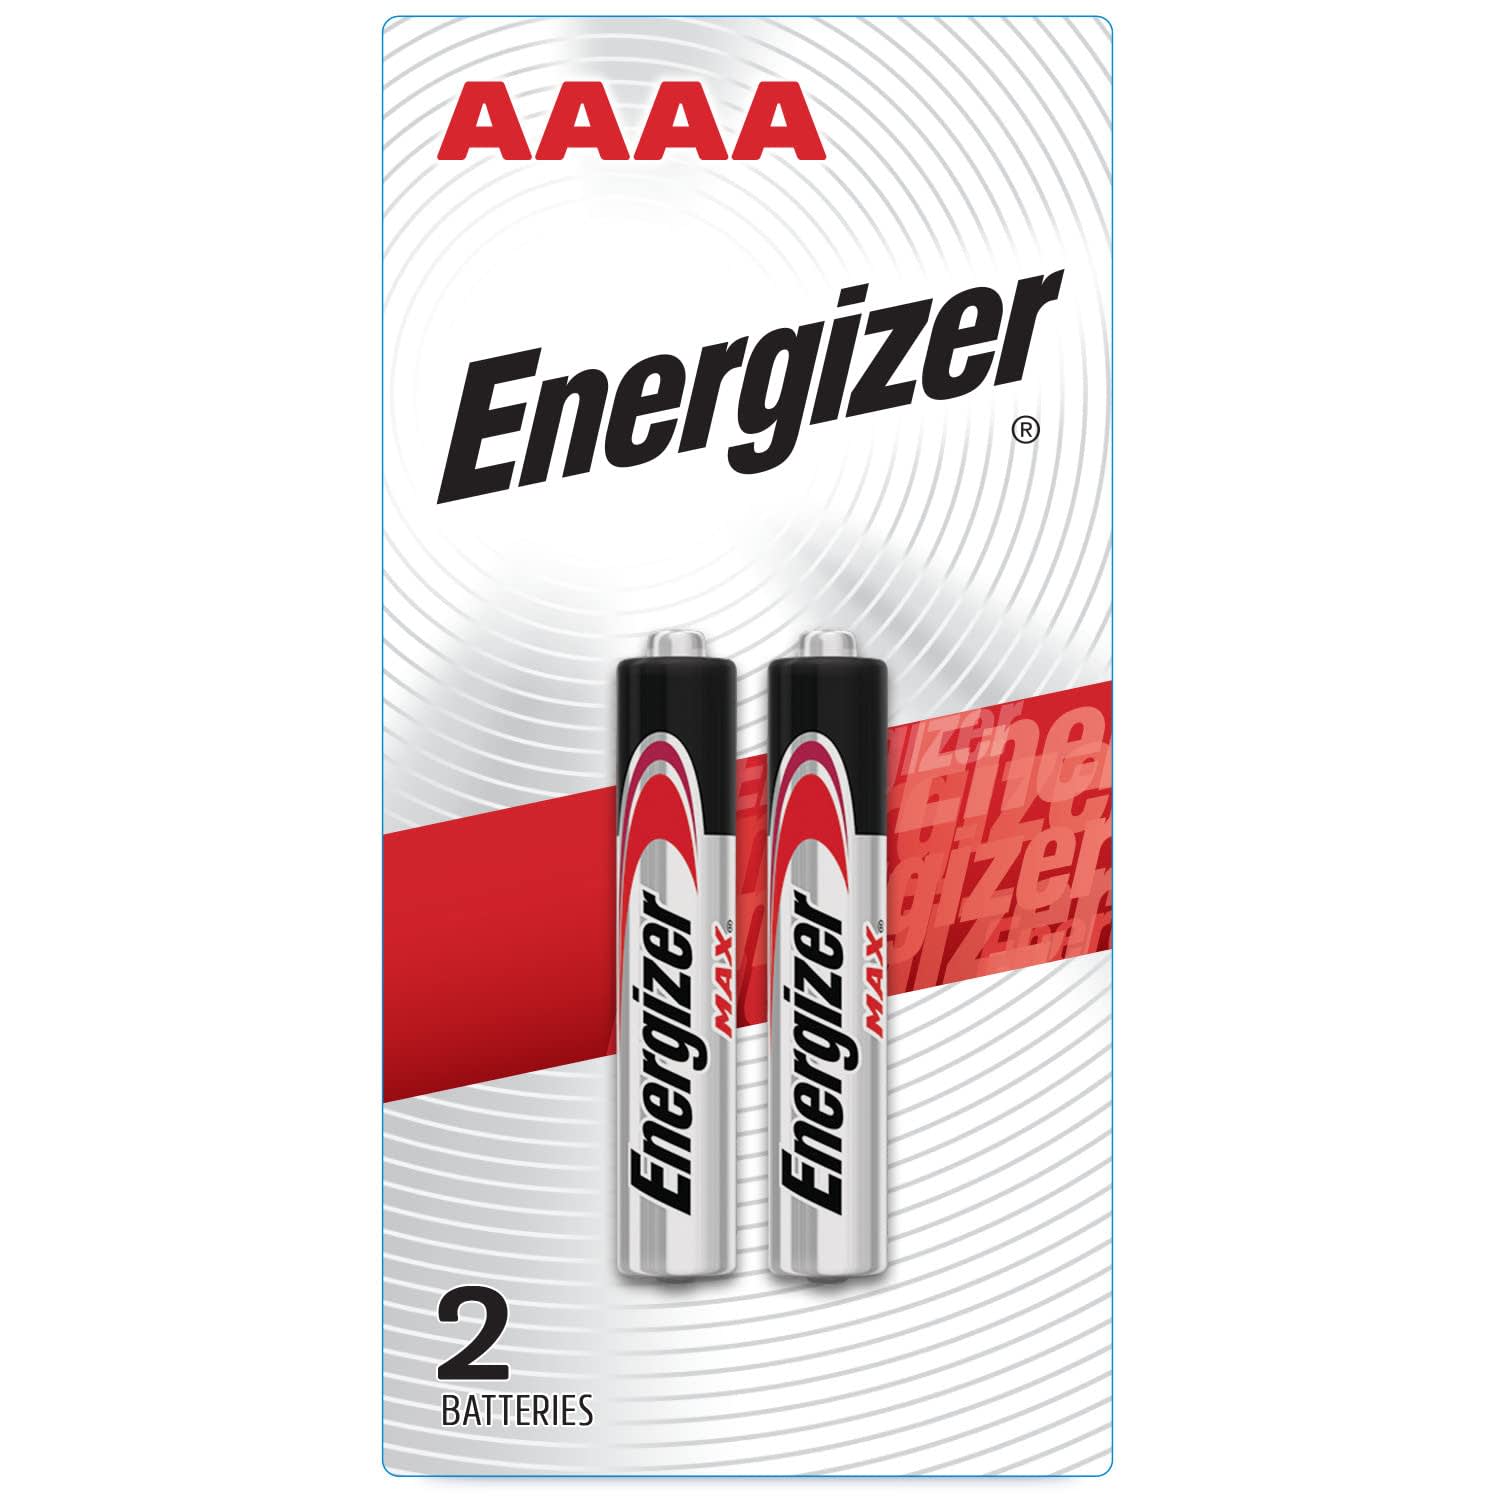 Energizer E96BP AAAA Alkaline Battery (2 Pieces), Silver